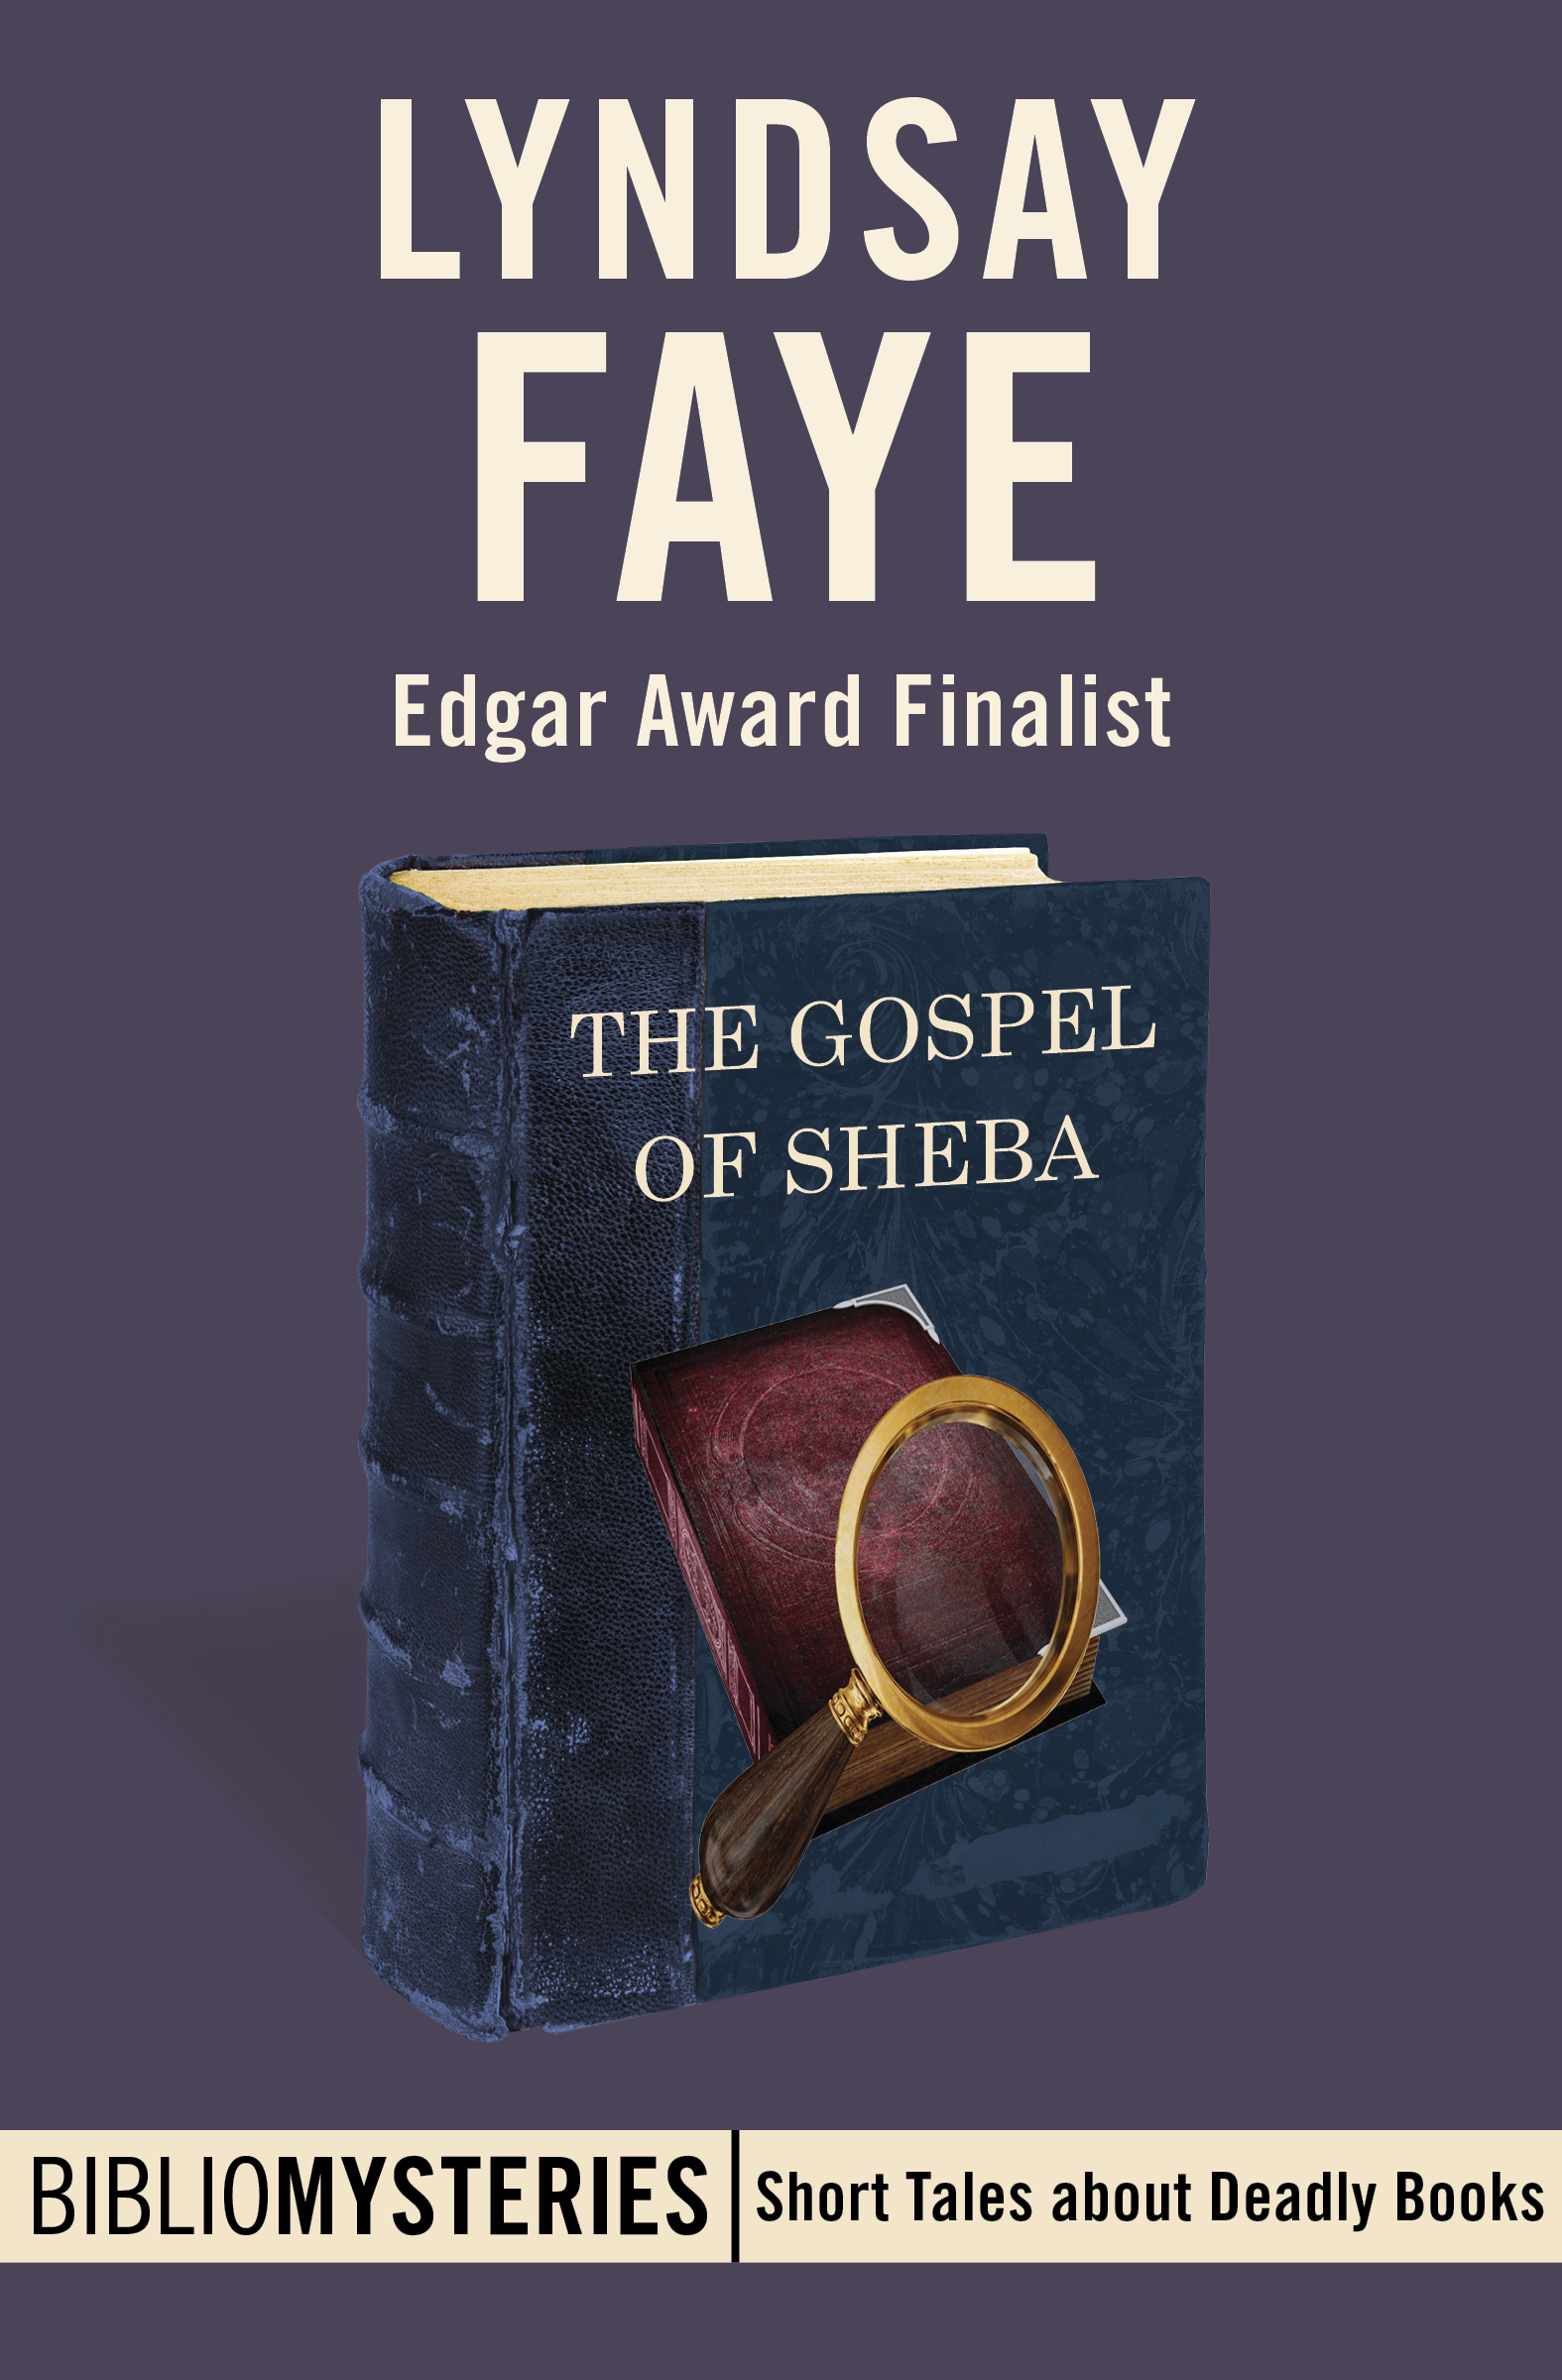 The Gospel of Sheba by Lyndsay Faye